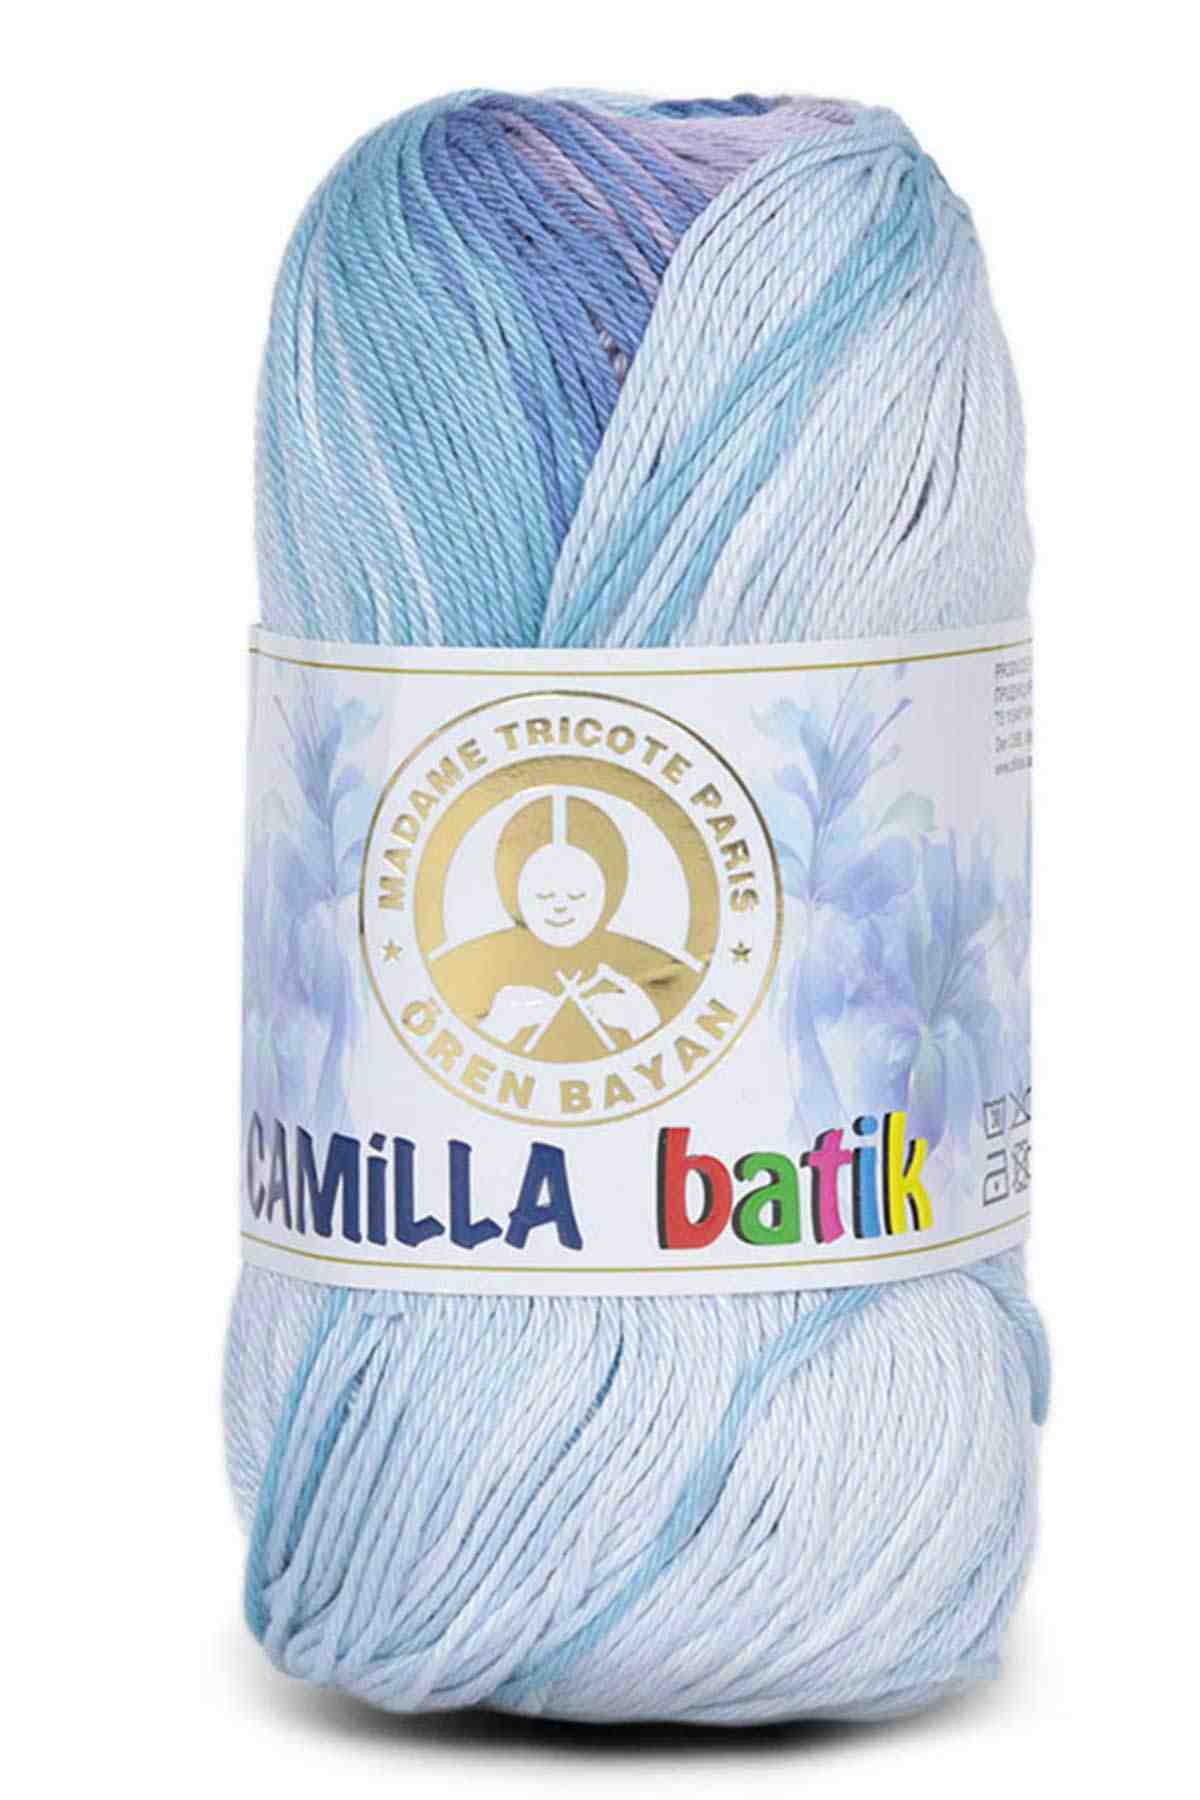 Madame Tricote Paris Camilla Multicolor Cotton Yarn